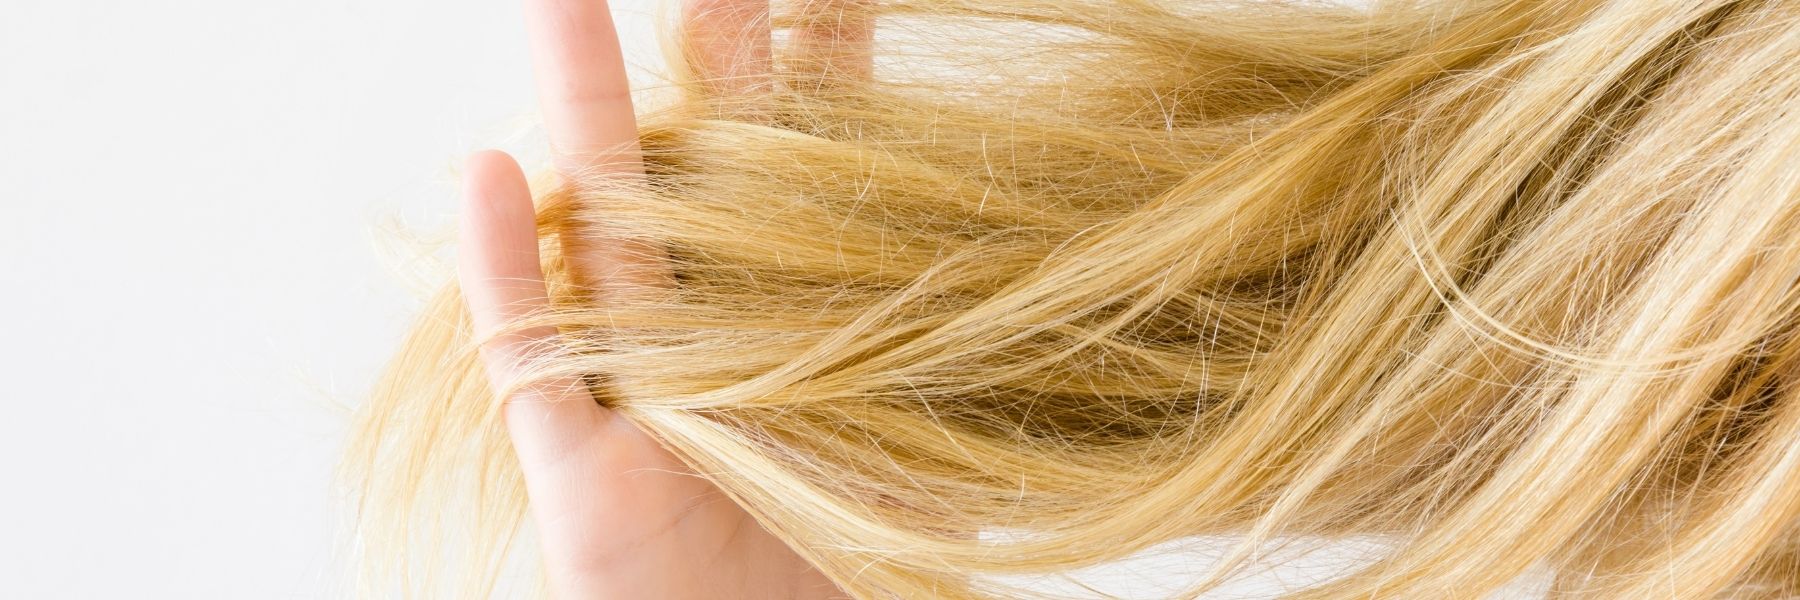 SOS cheveux fins et fragiles : soins fortifiants naturels à adopter